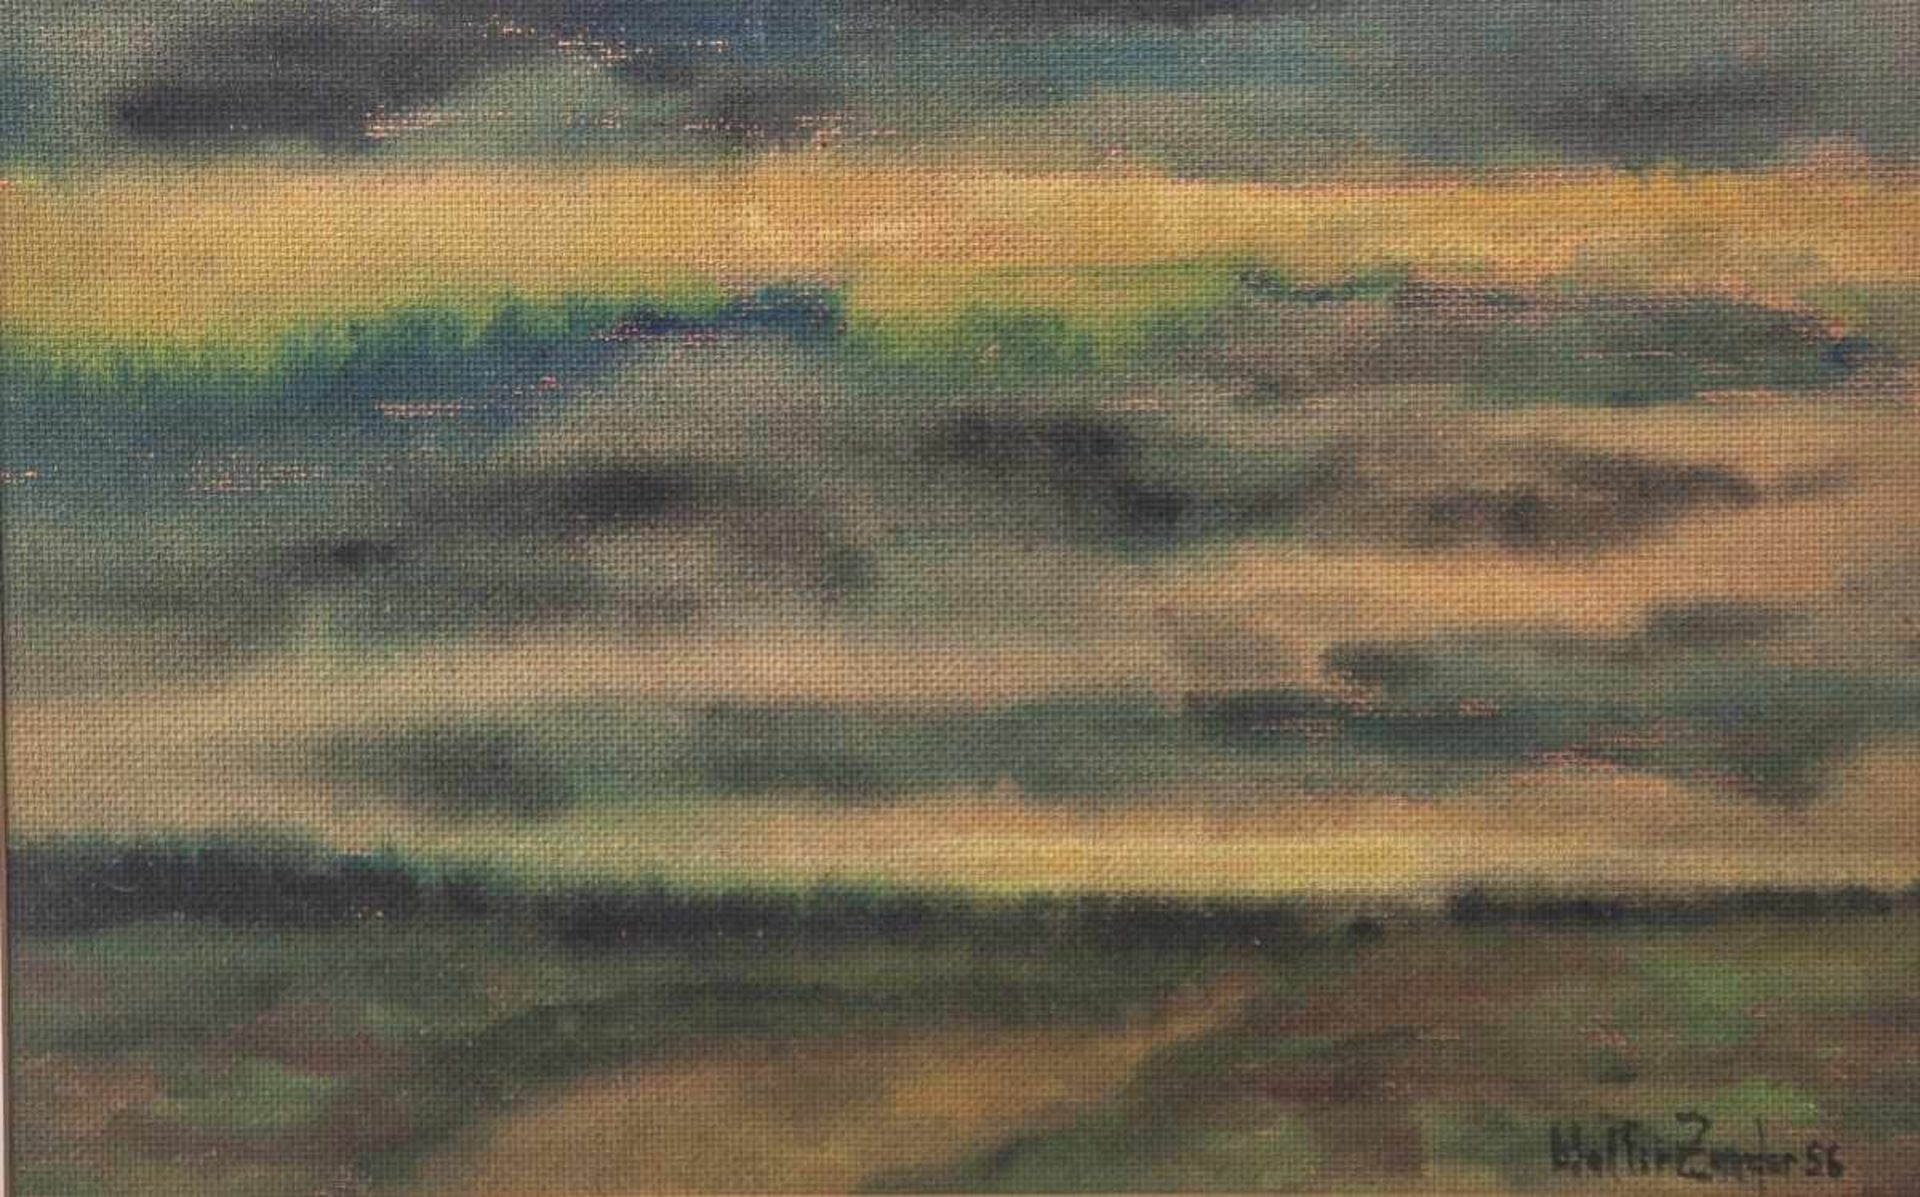 Zander, Walter, "Sonnenuntergang", Aquarell auf Hartfaserstrukturseite, sign. dat 1956,ca. 26 x 38